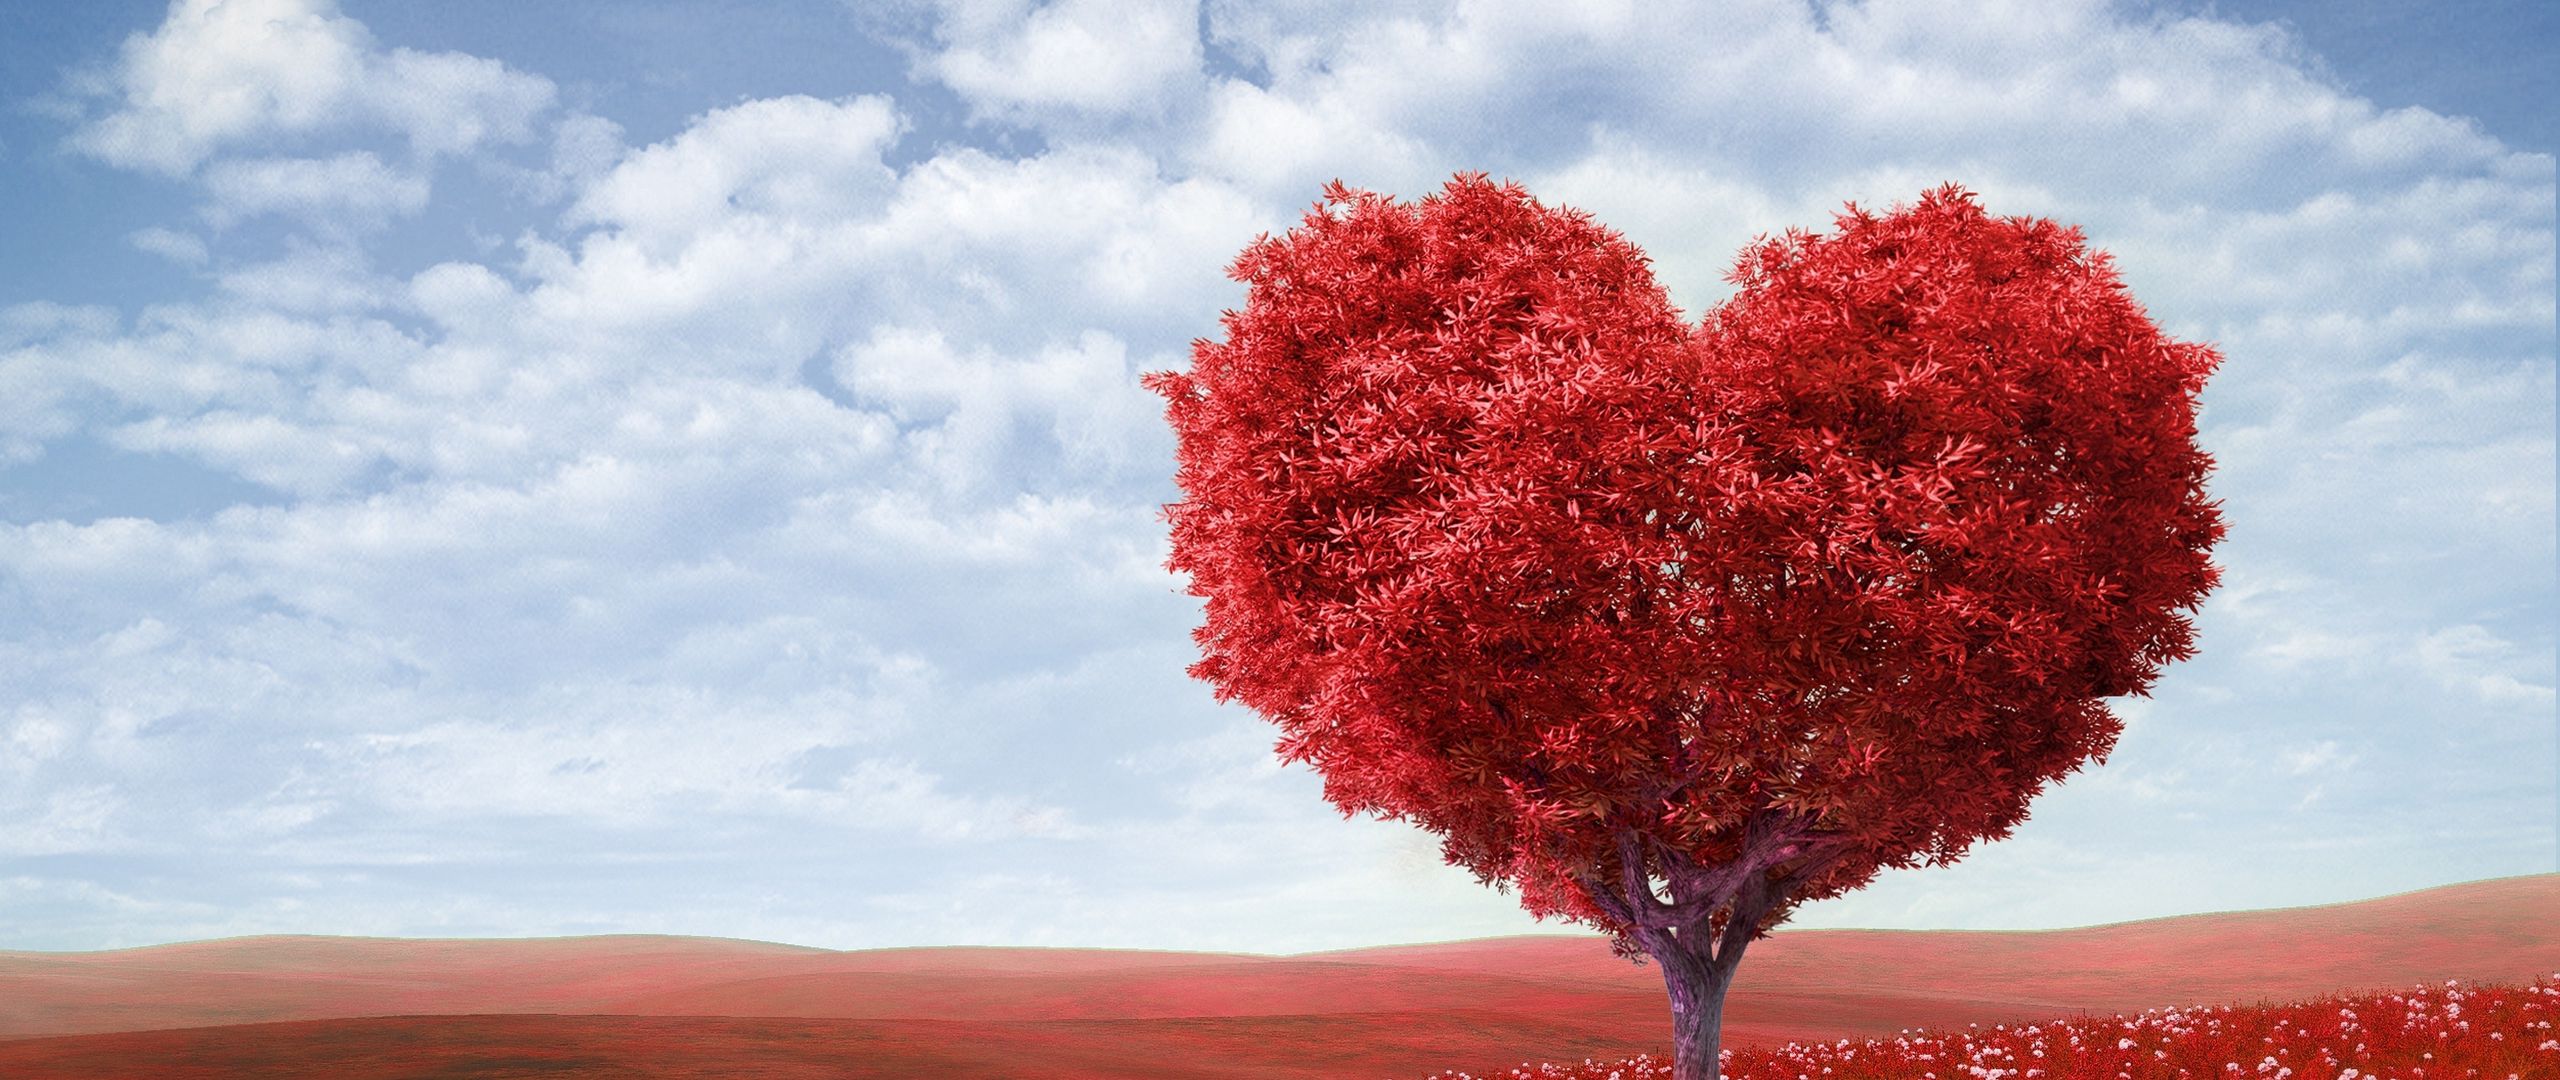 2560x1080 Wallpaper tree, heart, photoshop, field, grass, romance